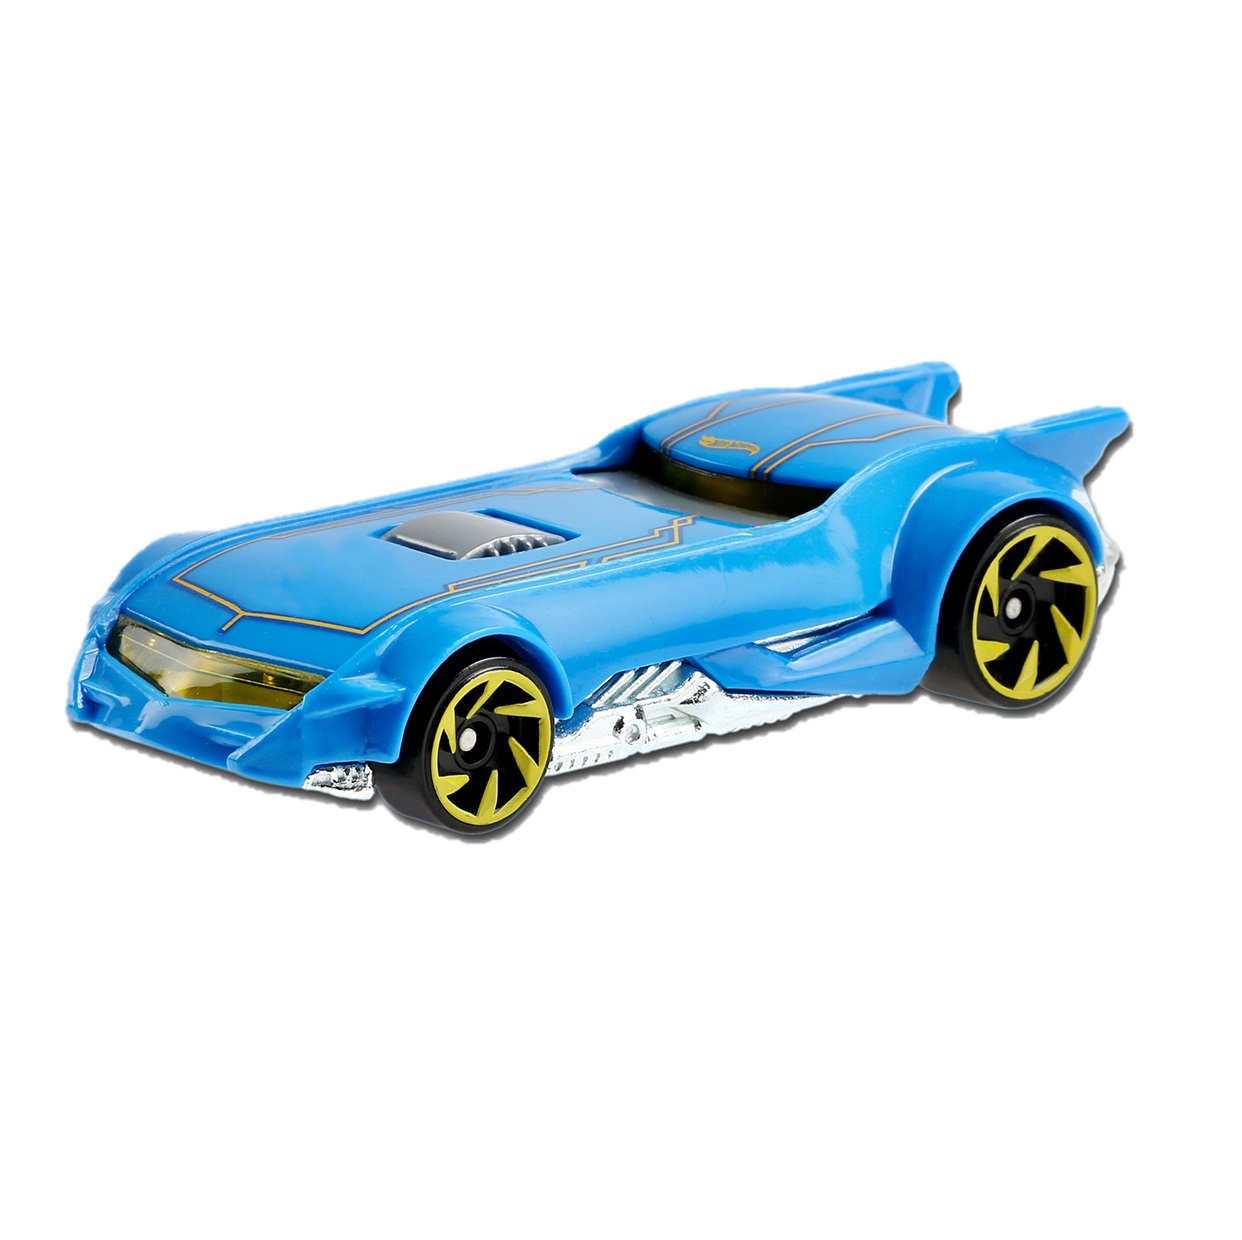 Batmobile Azul 2/5 Hot Wheels Dc The Batman 56/250